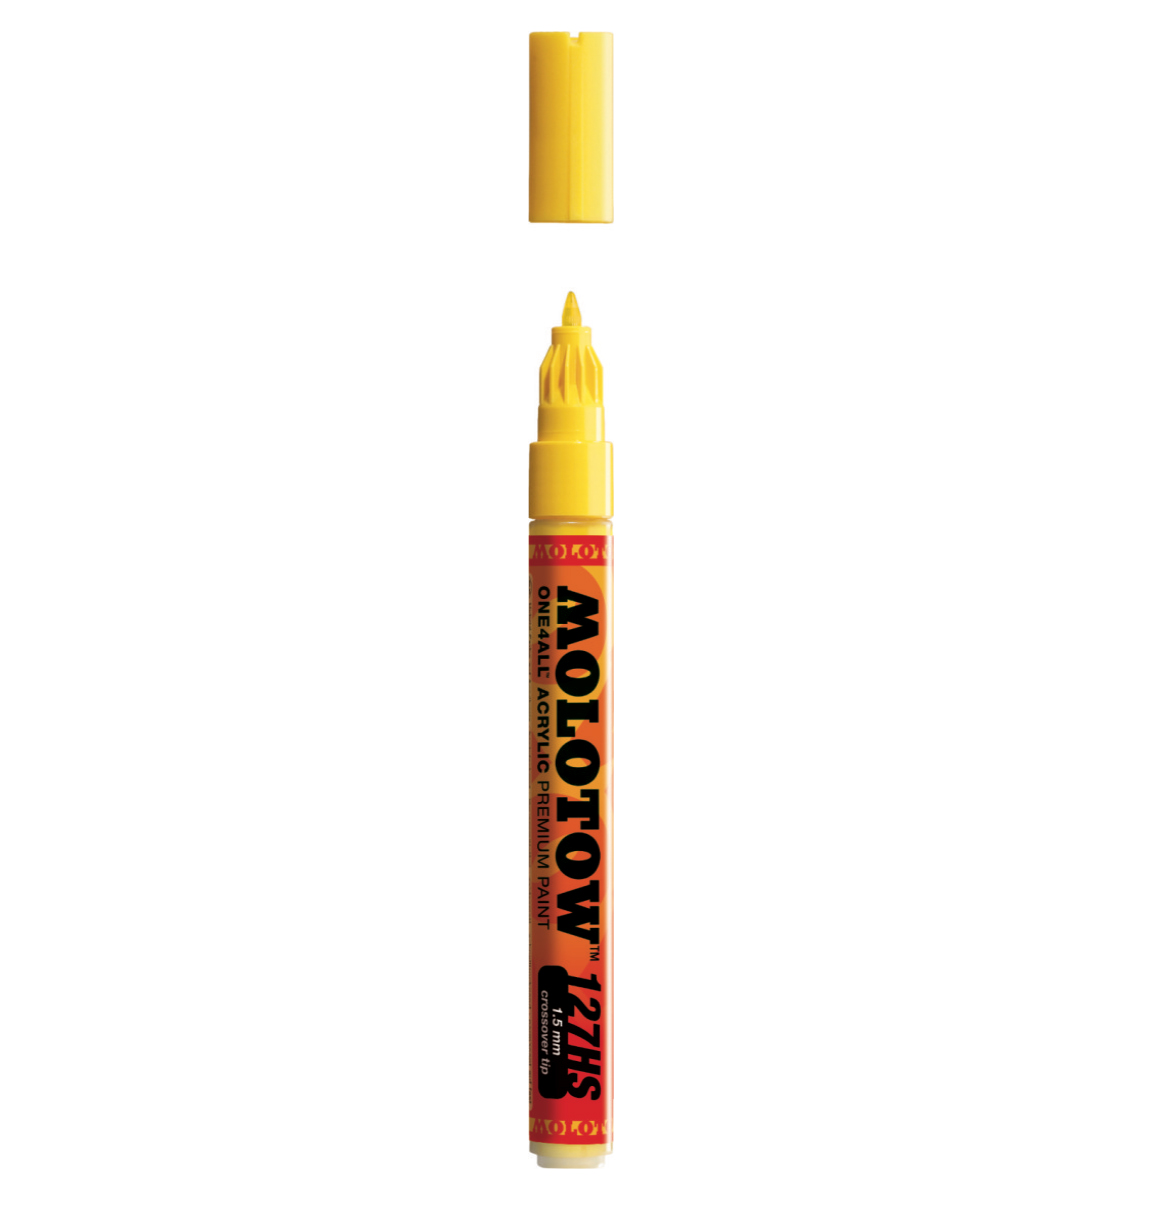 Molotow Co Tip 1.5Mm Zinc Yellow Paint Marker